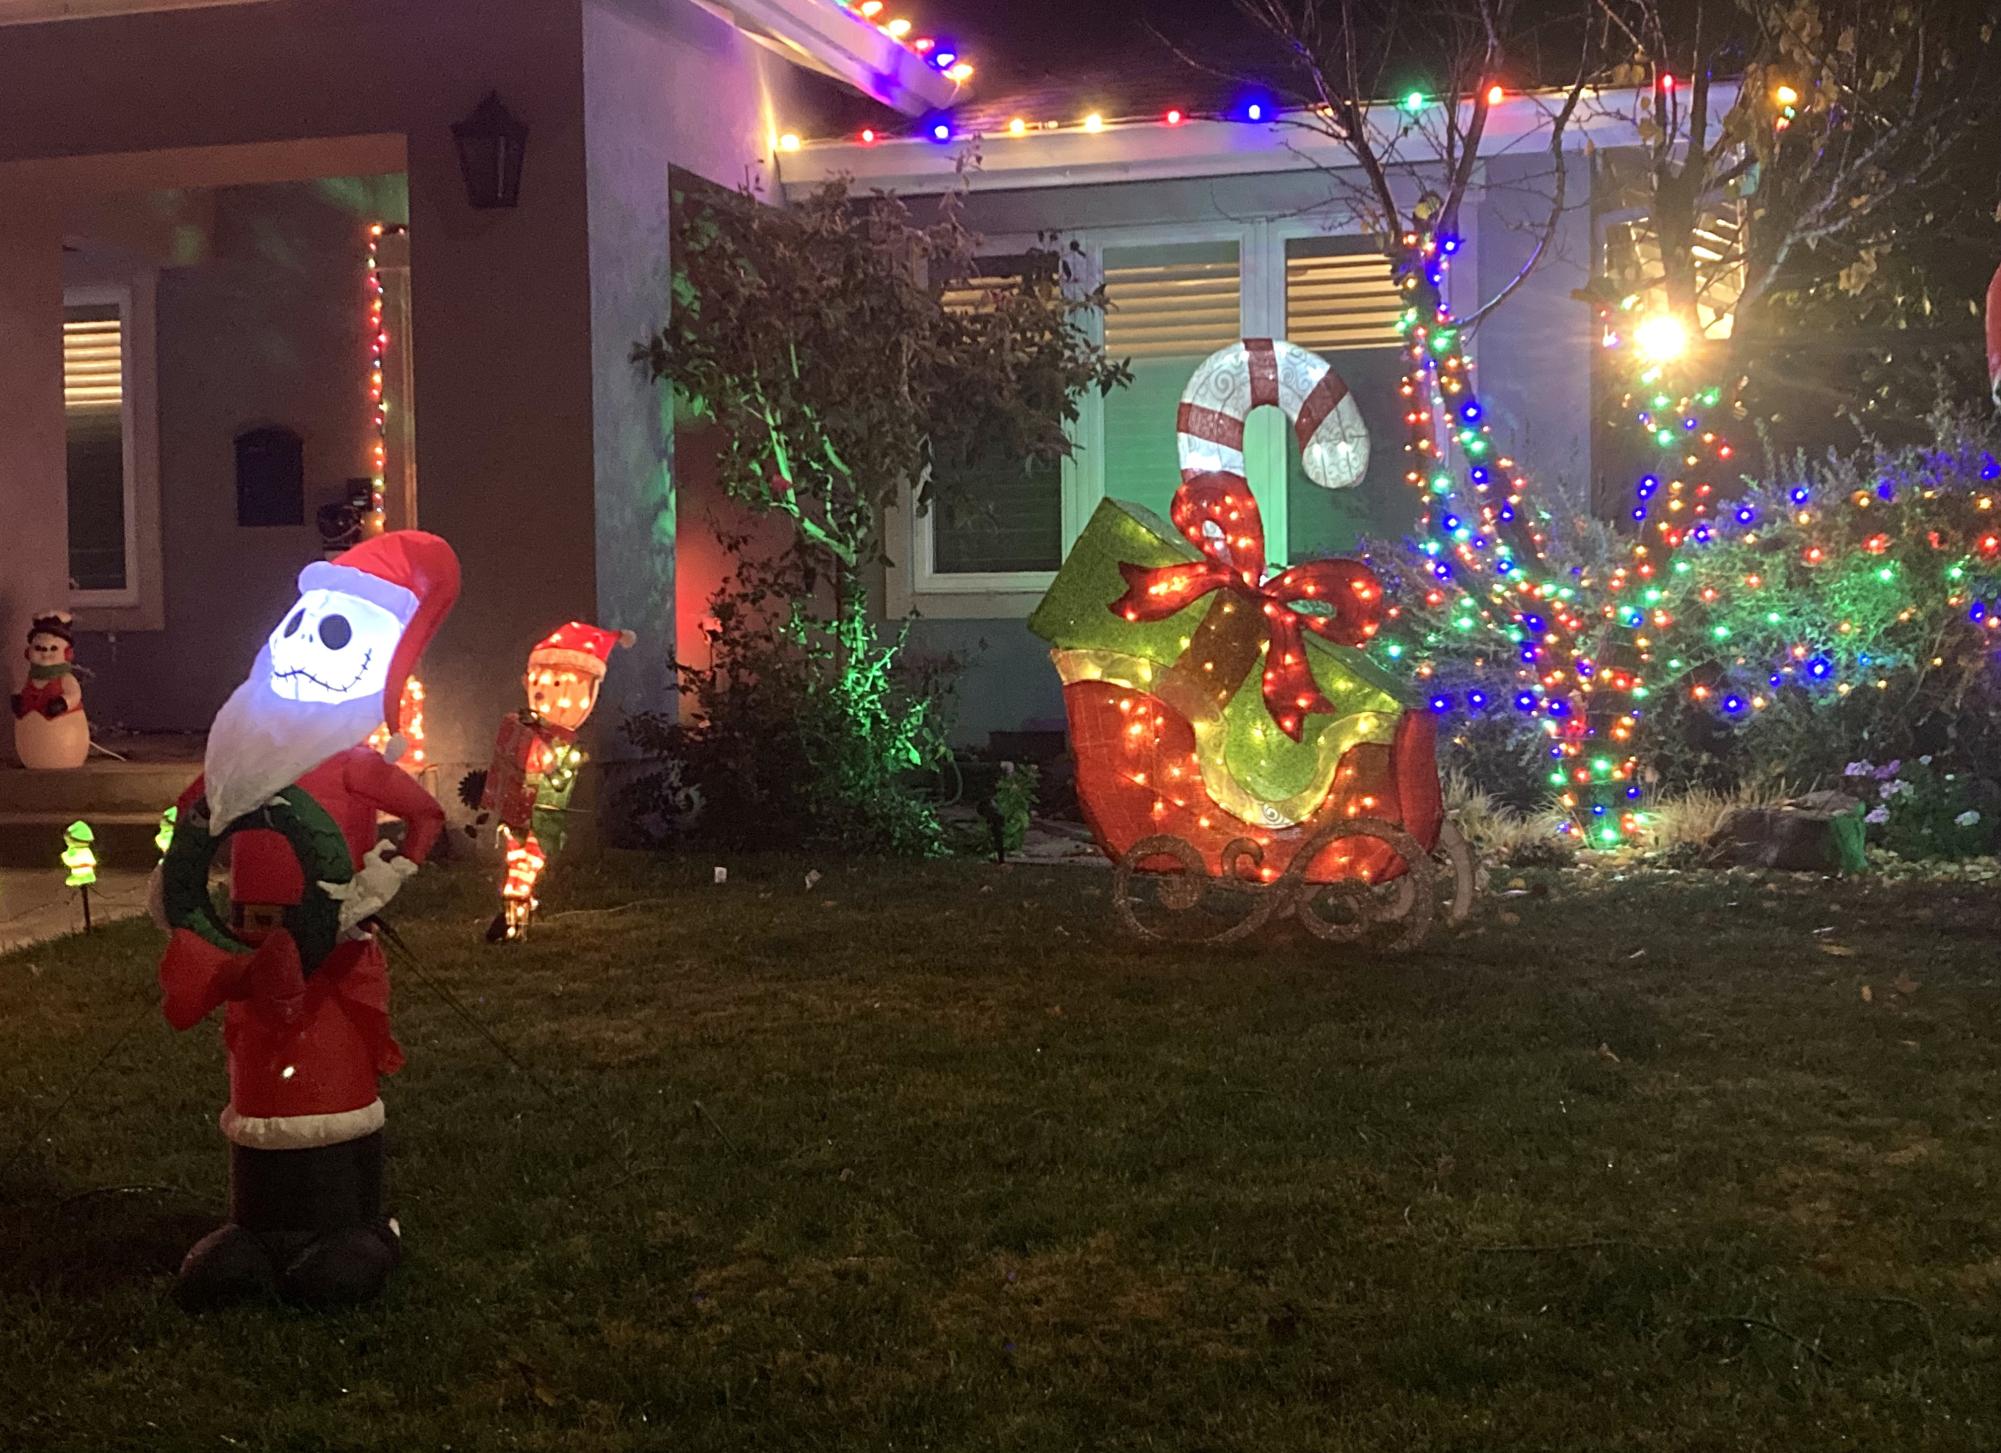 Sightseeing+the+town%3A+Christmas+lights+around+Pleasanton